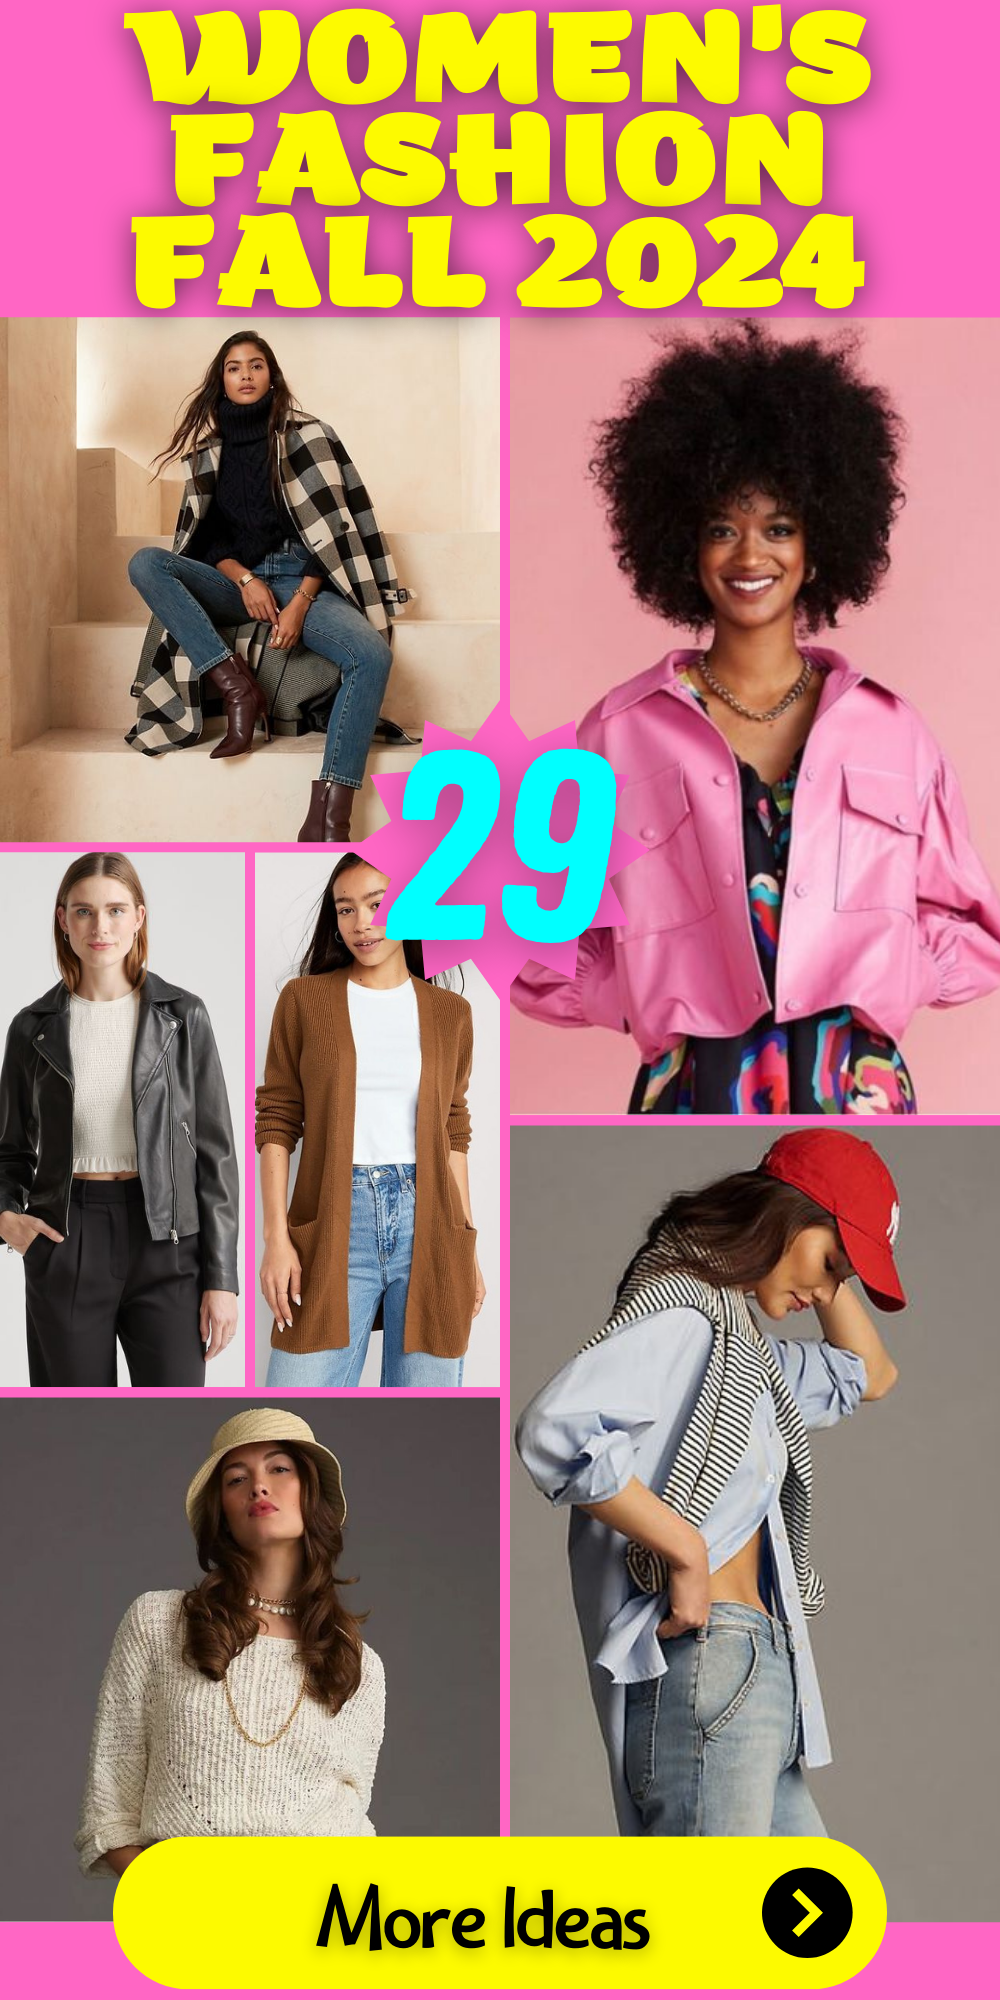 Women's Fashion Fall 2024: 29 Ideas for a Stylish Season